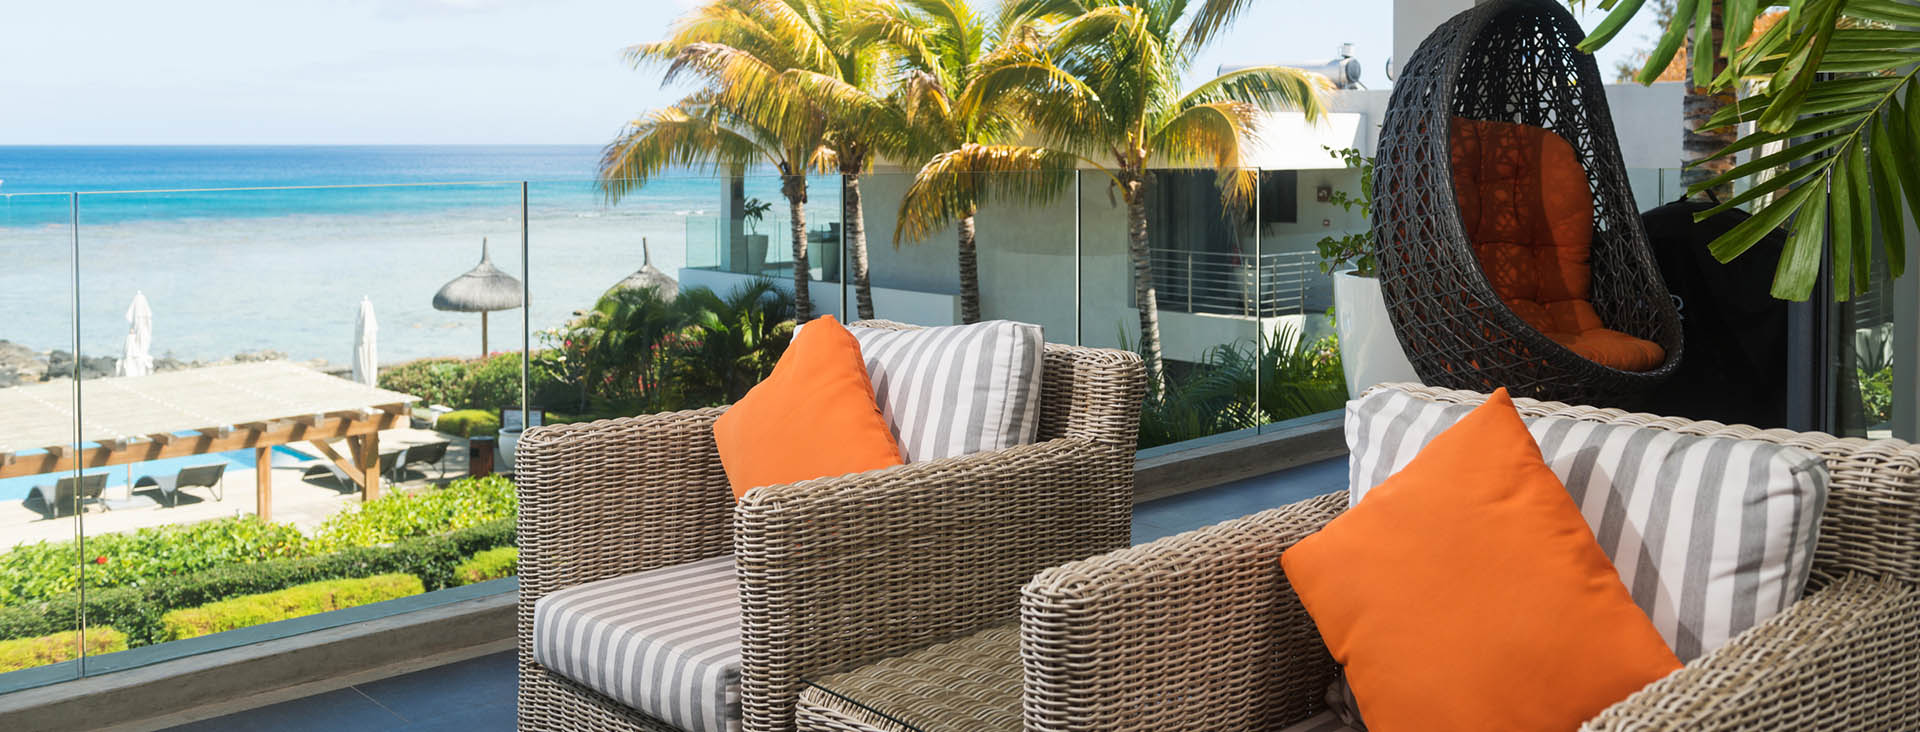 Mauritius luxury beach villas living room view on pool